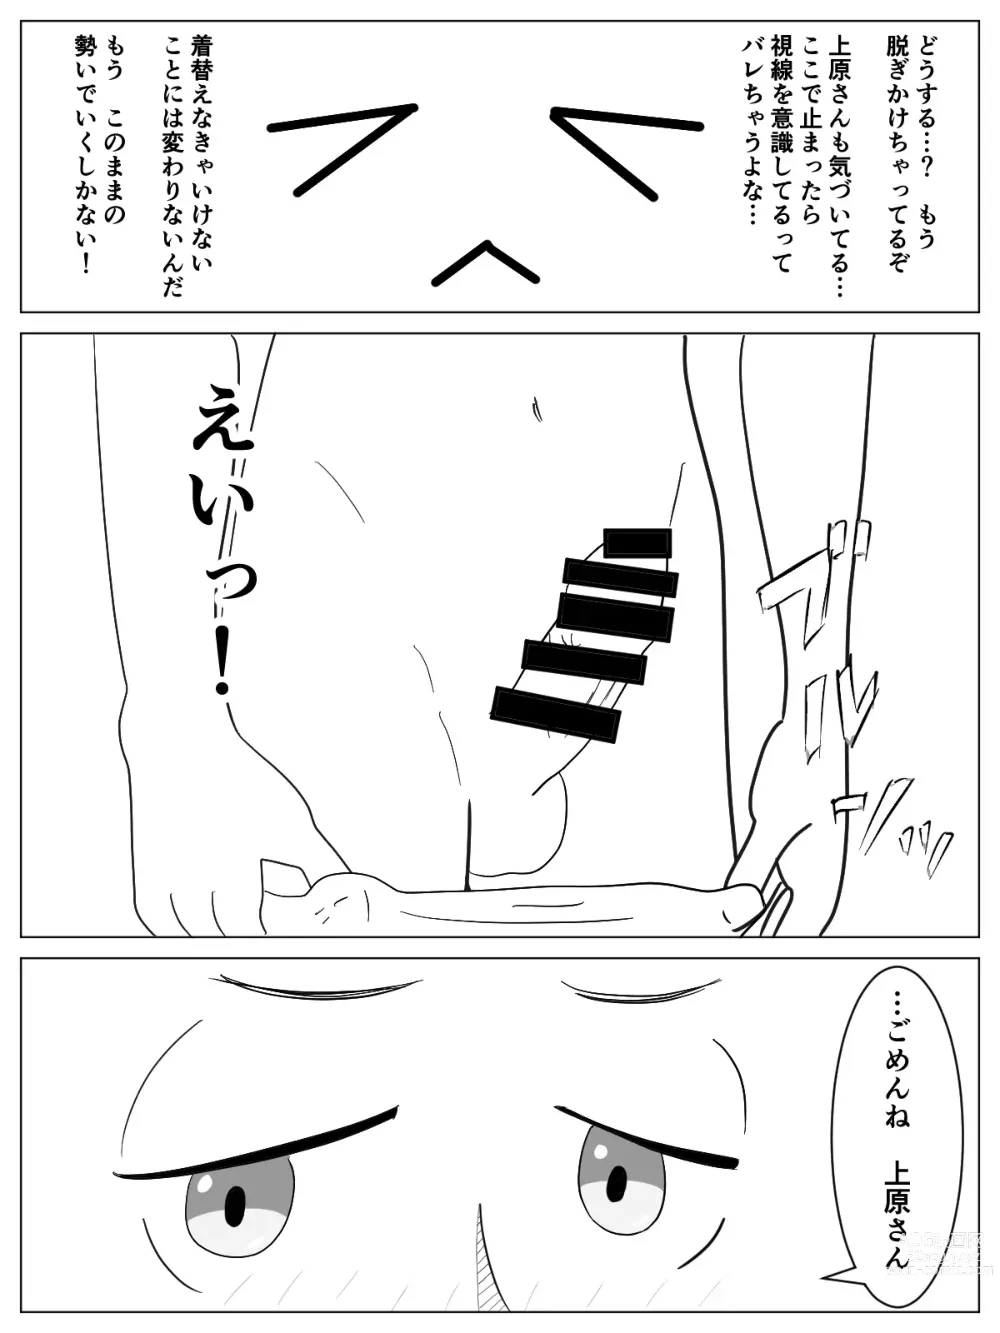 Page 14 of doujinshi Danjo Kyoudou Koi-shitsu